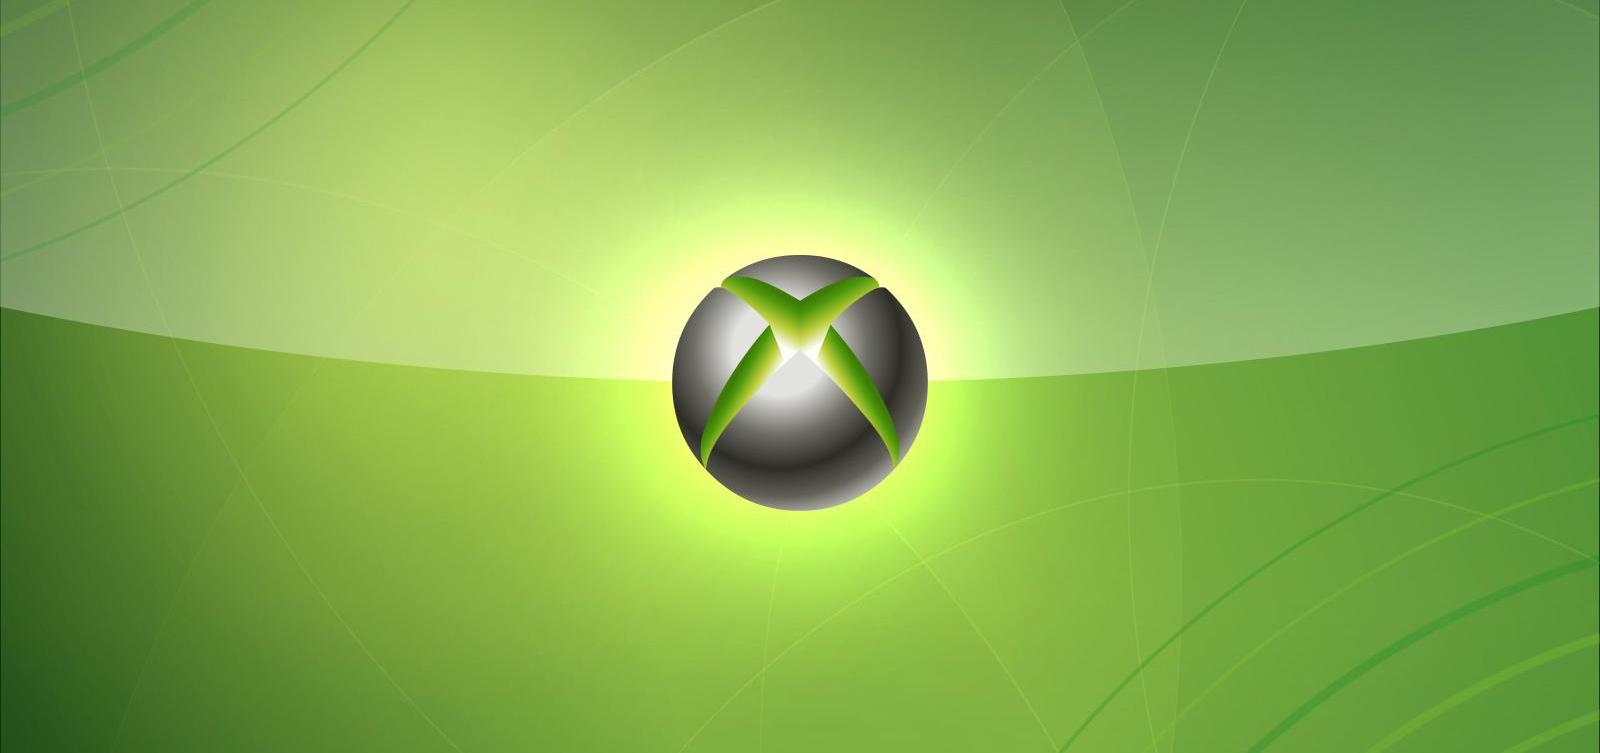 Xbox Games Logos Wallpaper Free Xbox Games Logos Background